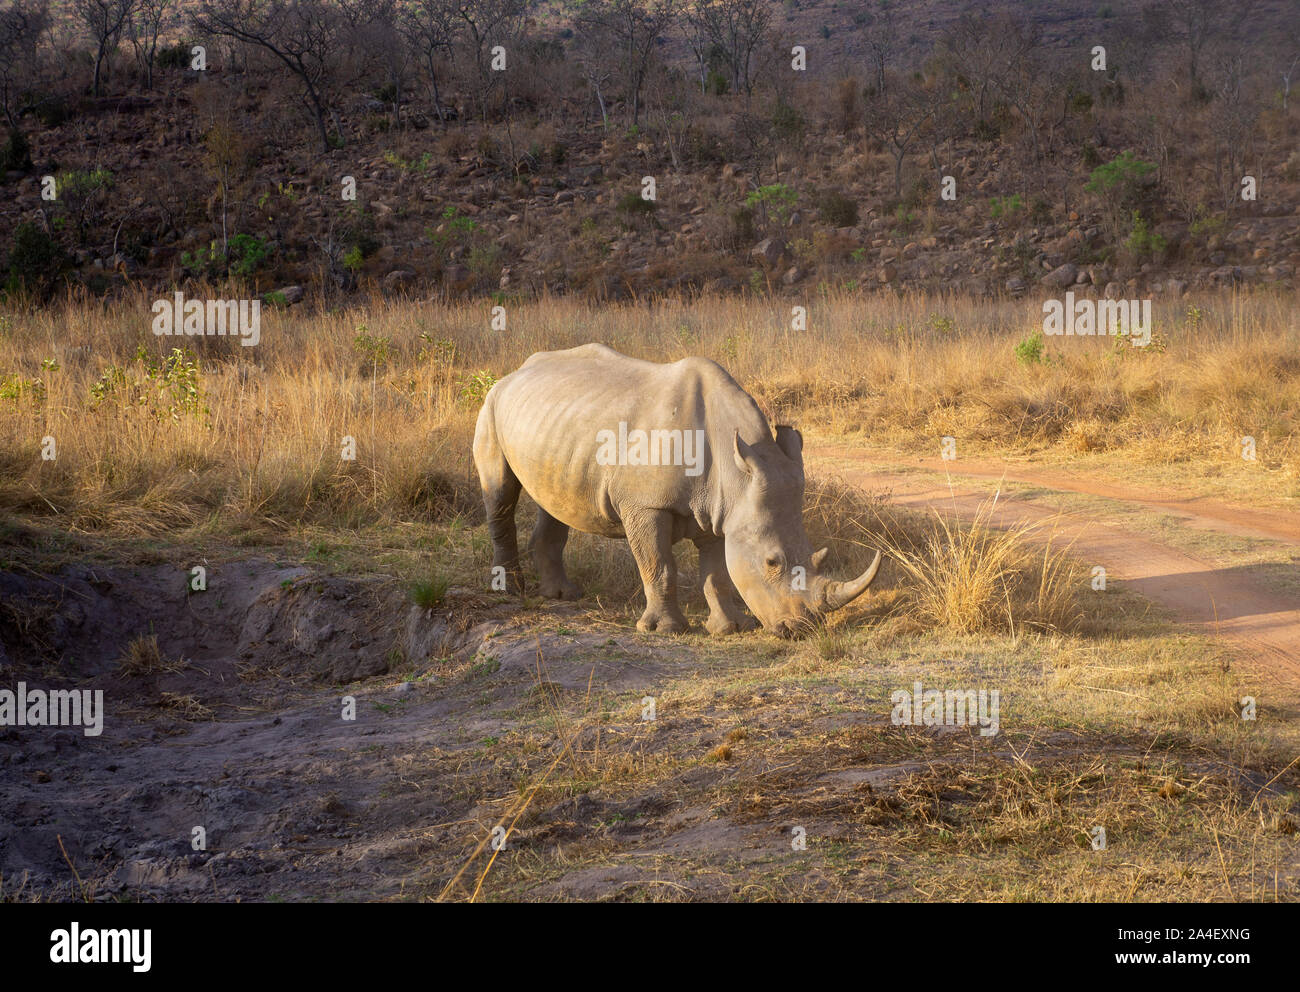 A White Rhinoceros Rhino (Ceratotherium simum). Welgevonden Game Reserve, South Africa Stock Photo